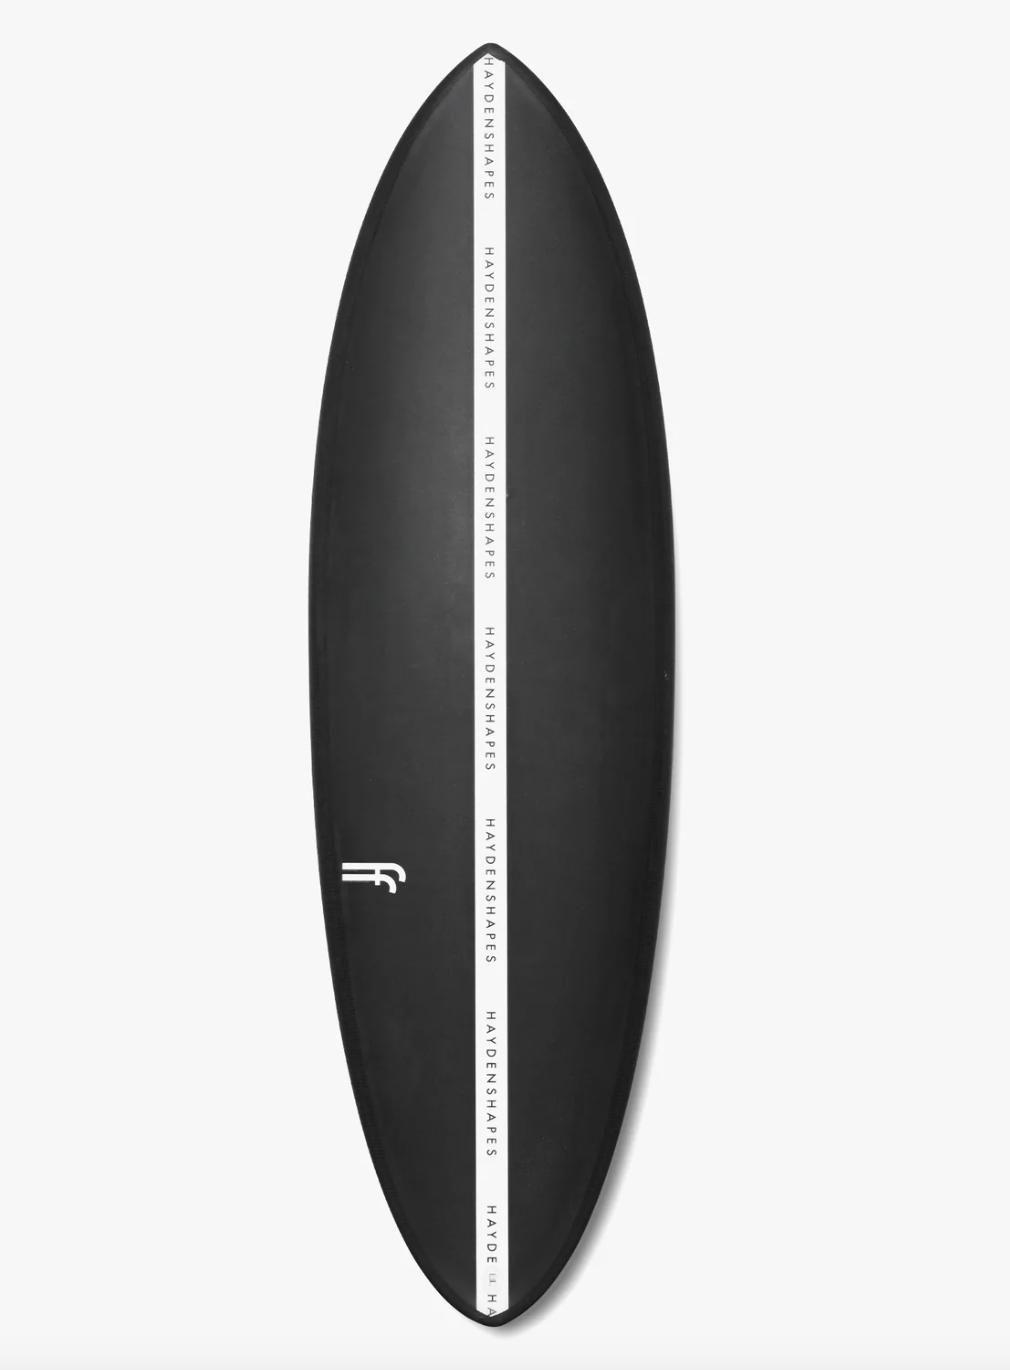 Hypto Kypto Futureflex - Haydenshapes Surfboard - 6'6" (In store pick-up only)